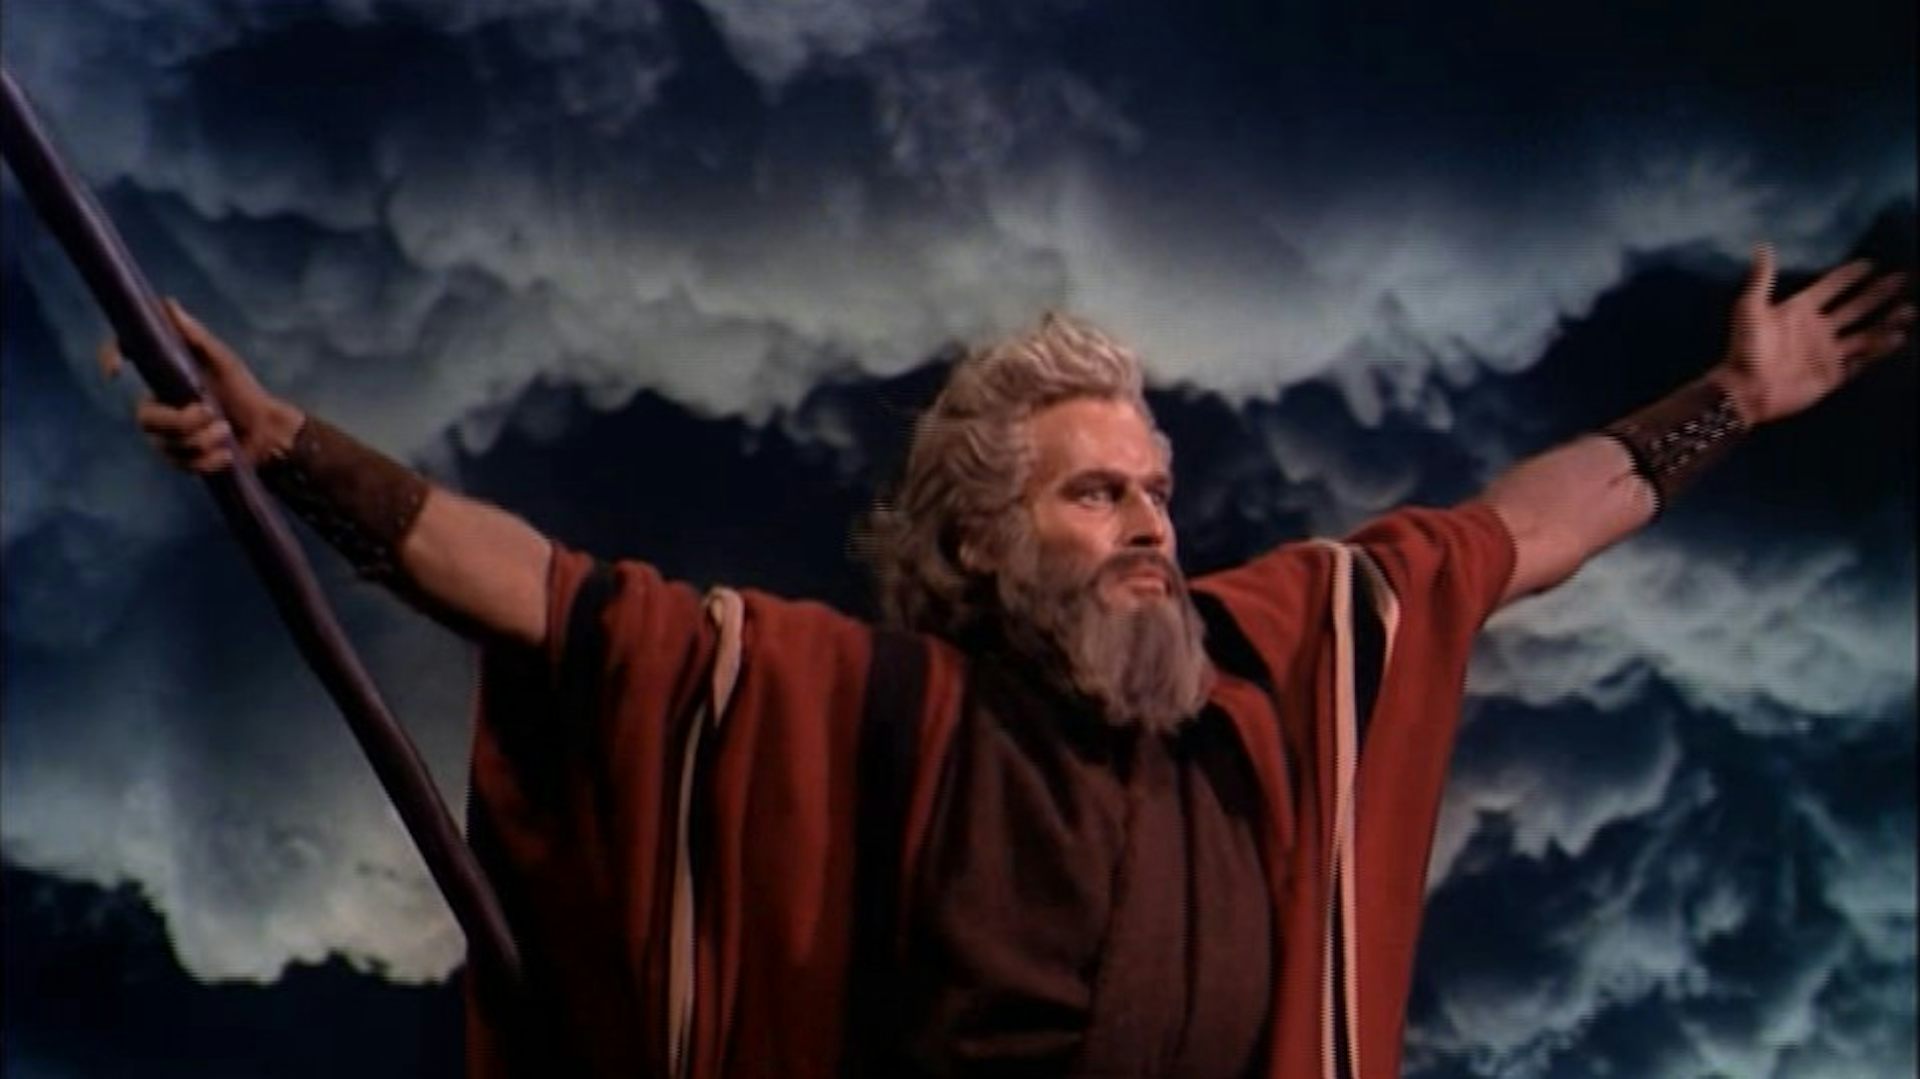 the ten commandments movie free online